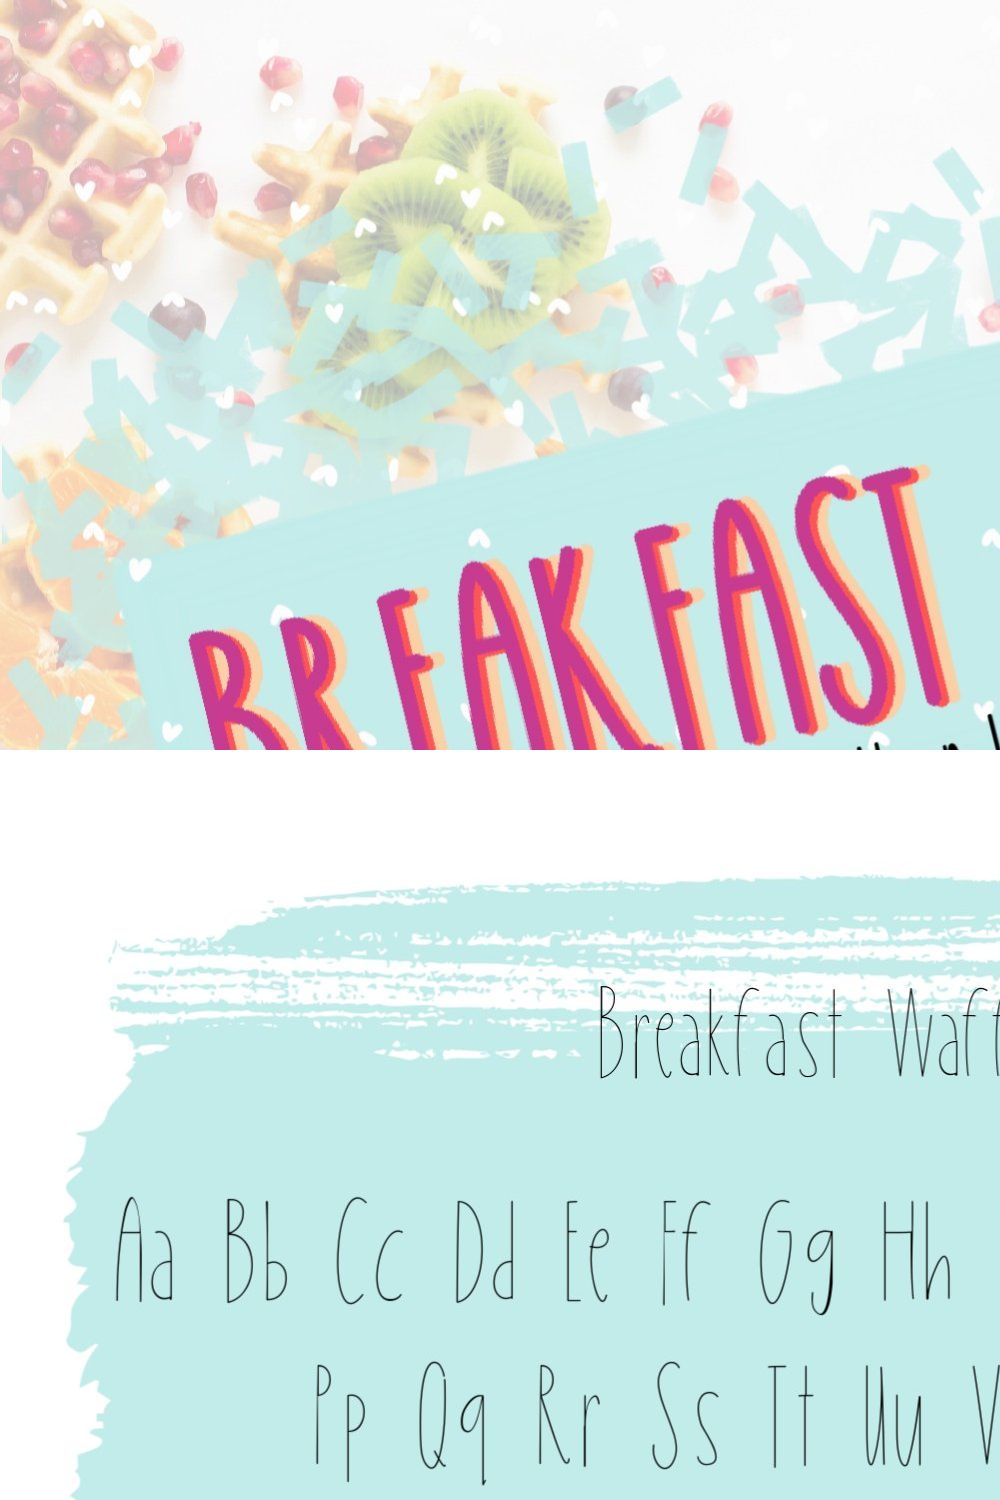 Breakfast Waffles Font pinterest preview image.